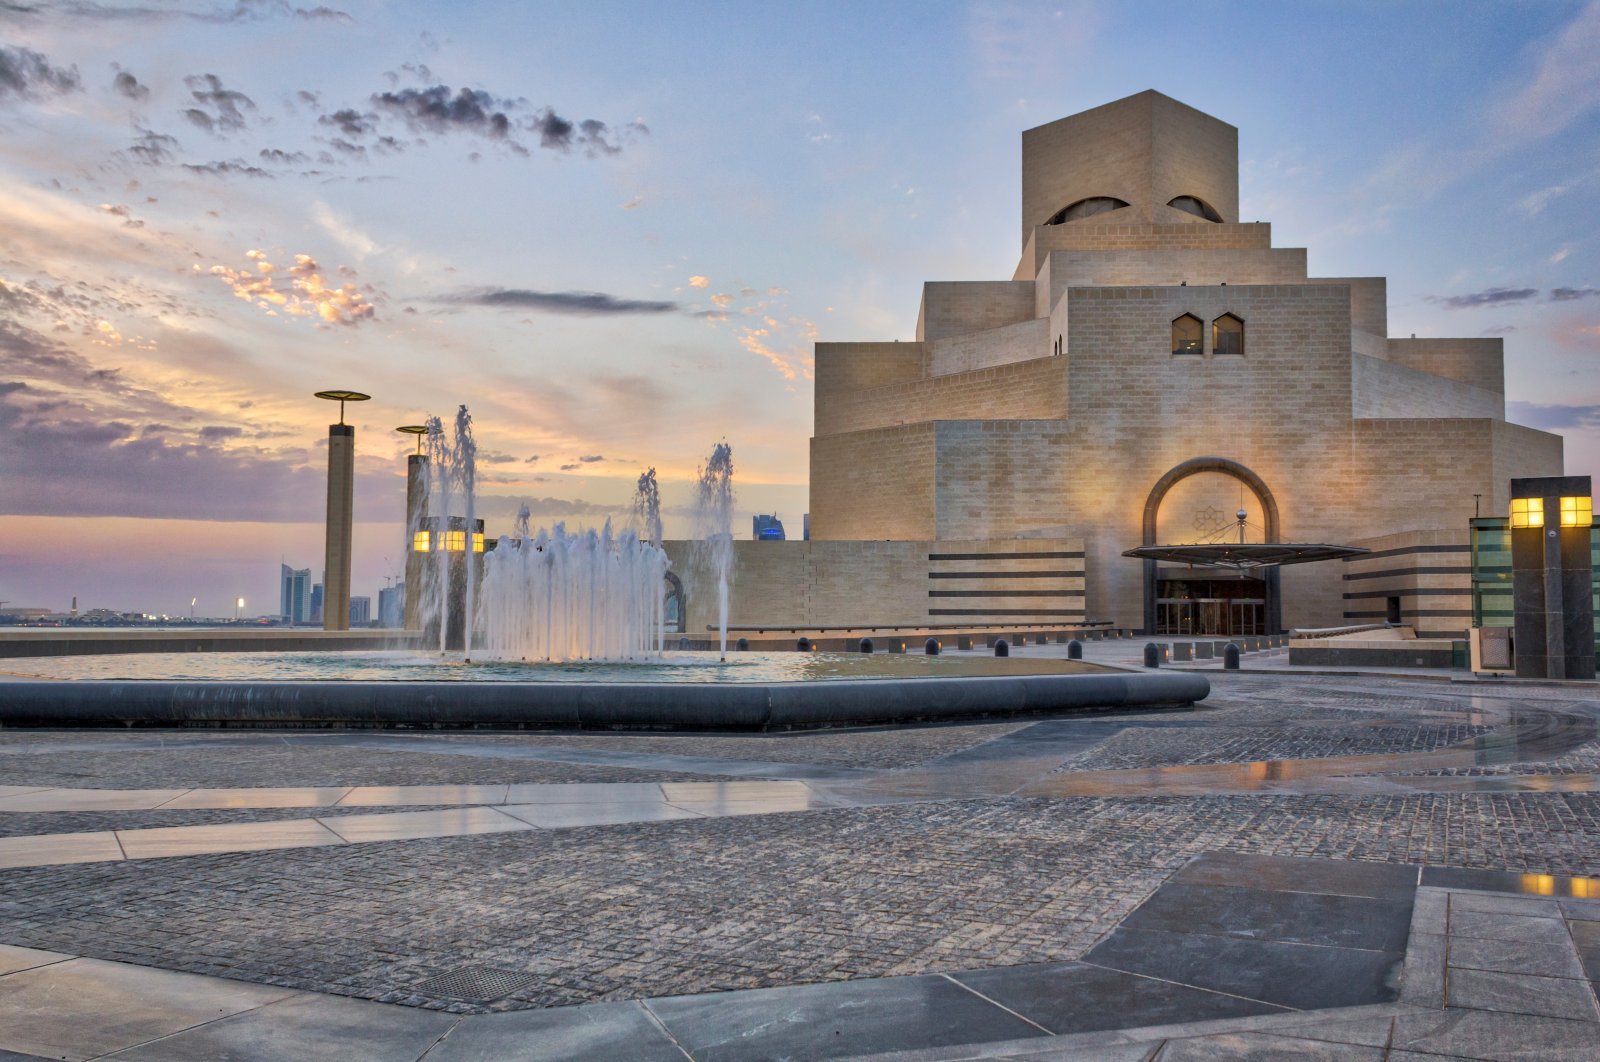 dailysabah.com - FUNDA KARAYEL - Must-see museums of Qatar blend artistic, architectural beauty